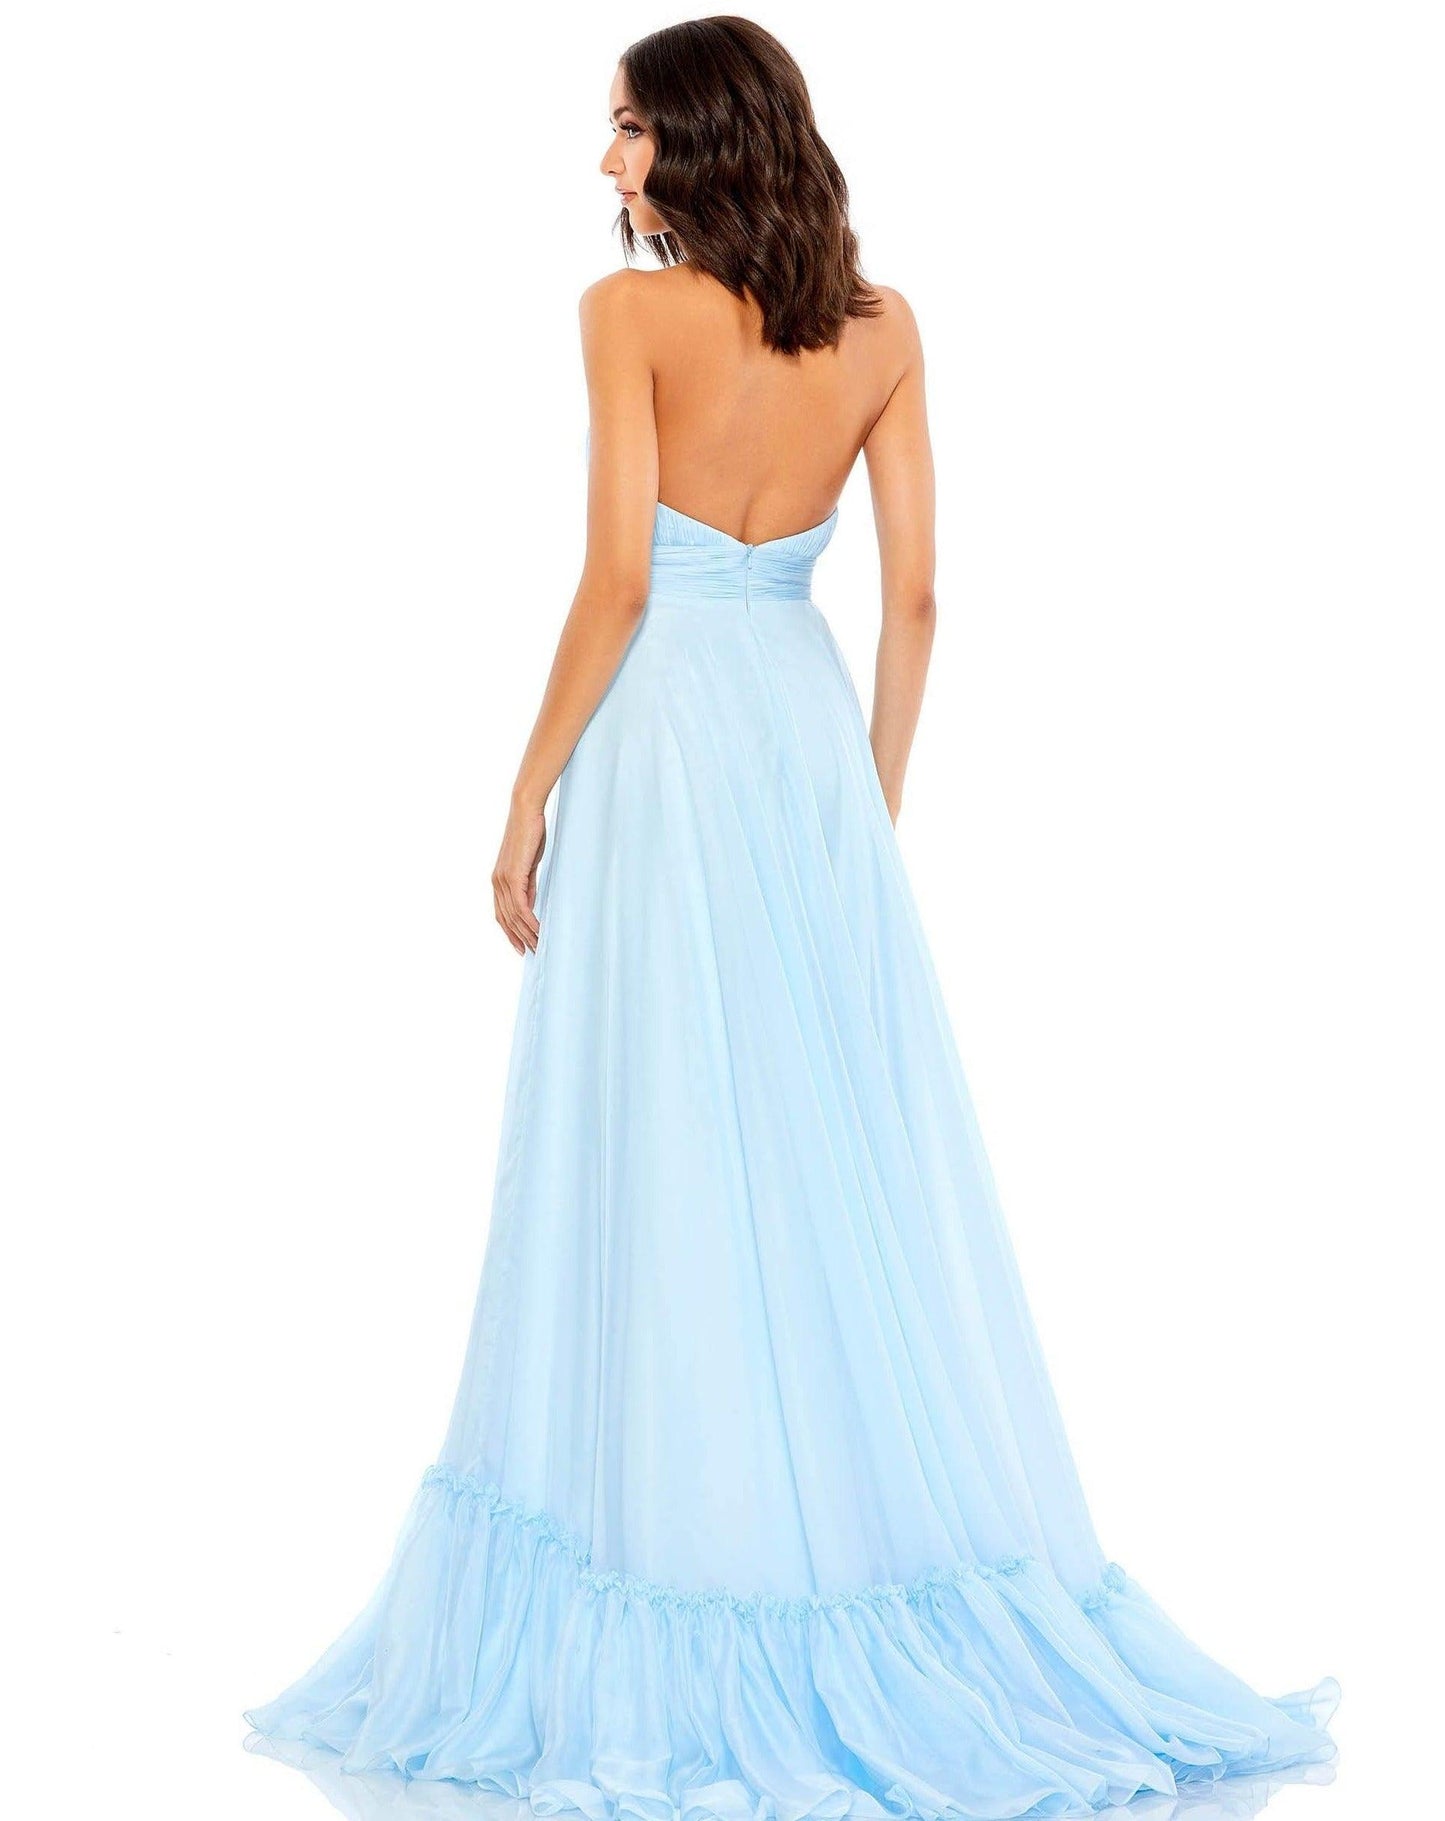 Mac Duggal  Prom Long Halter Chiffon Dress 67816 - The Dress Outlet